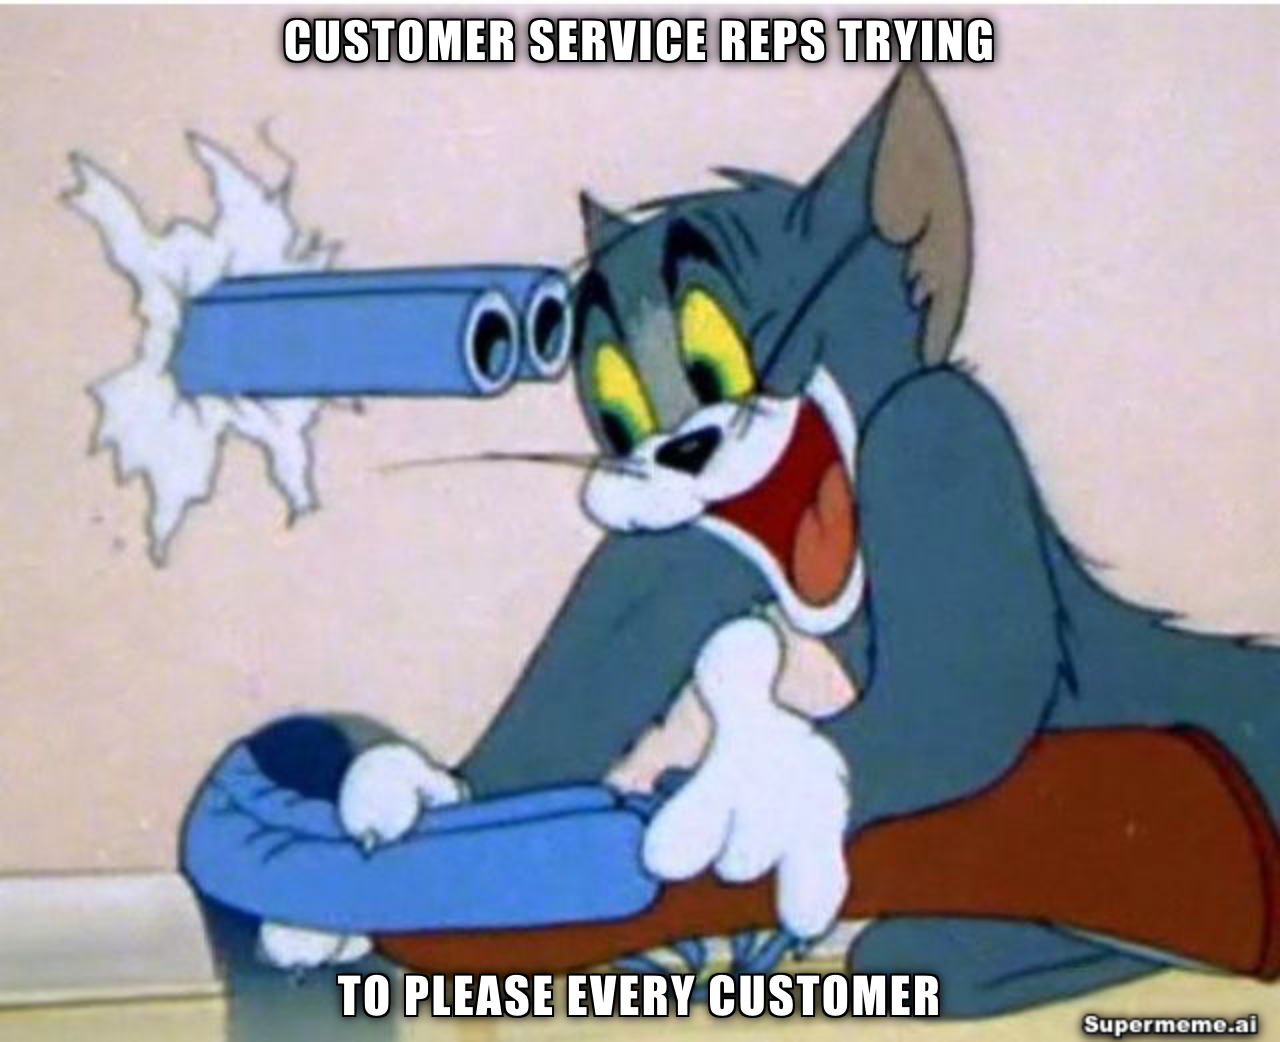 customer service team struggling meme